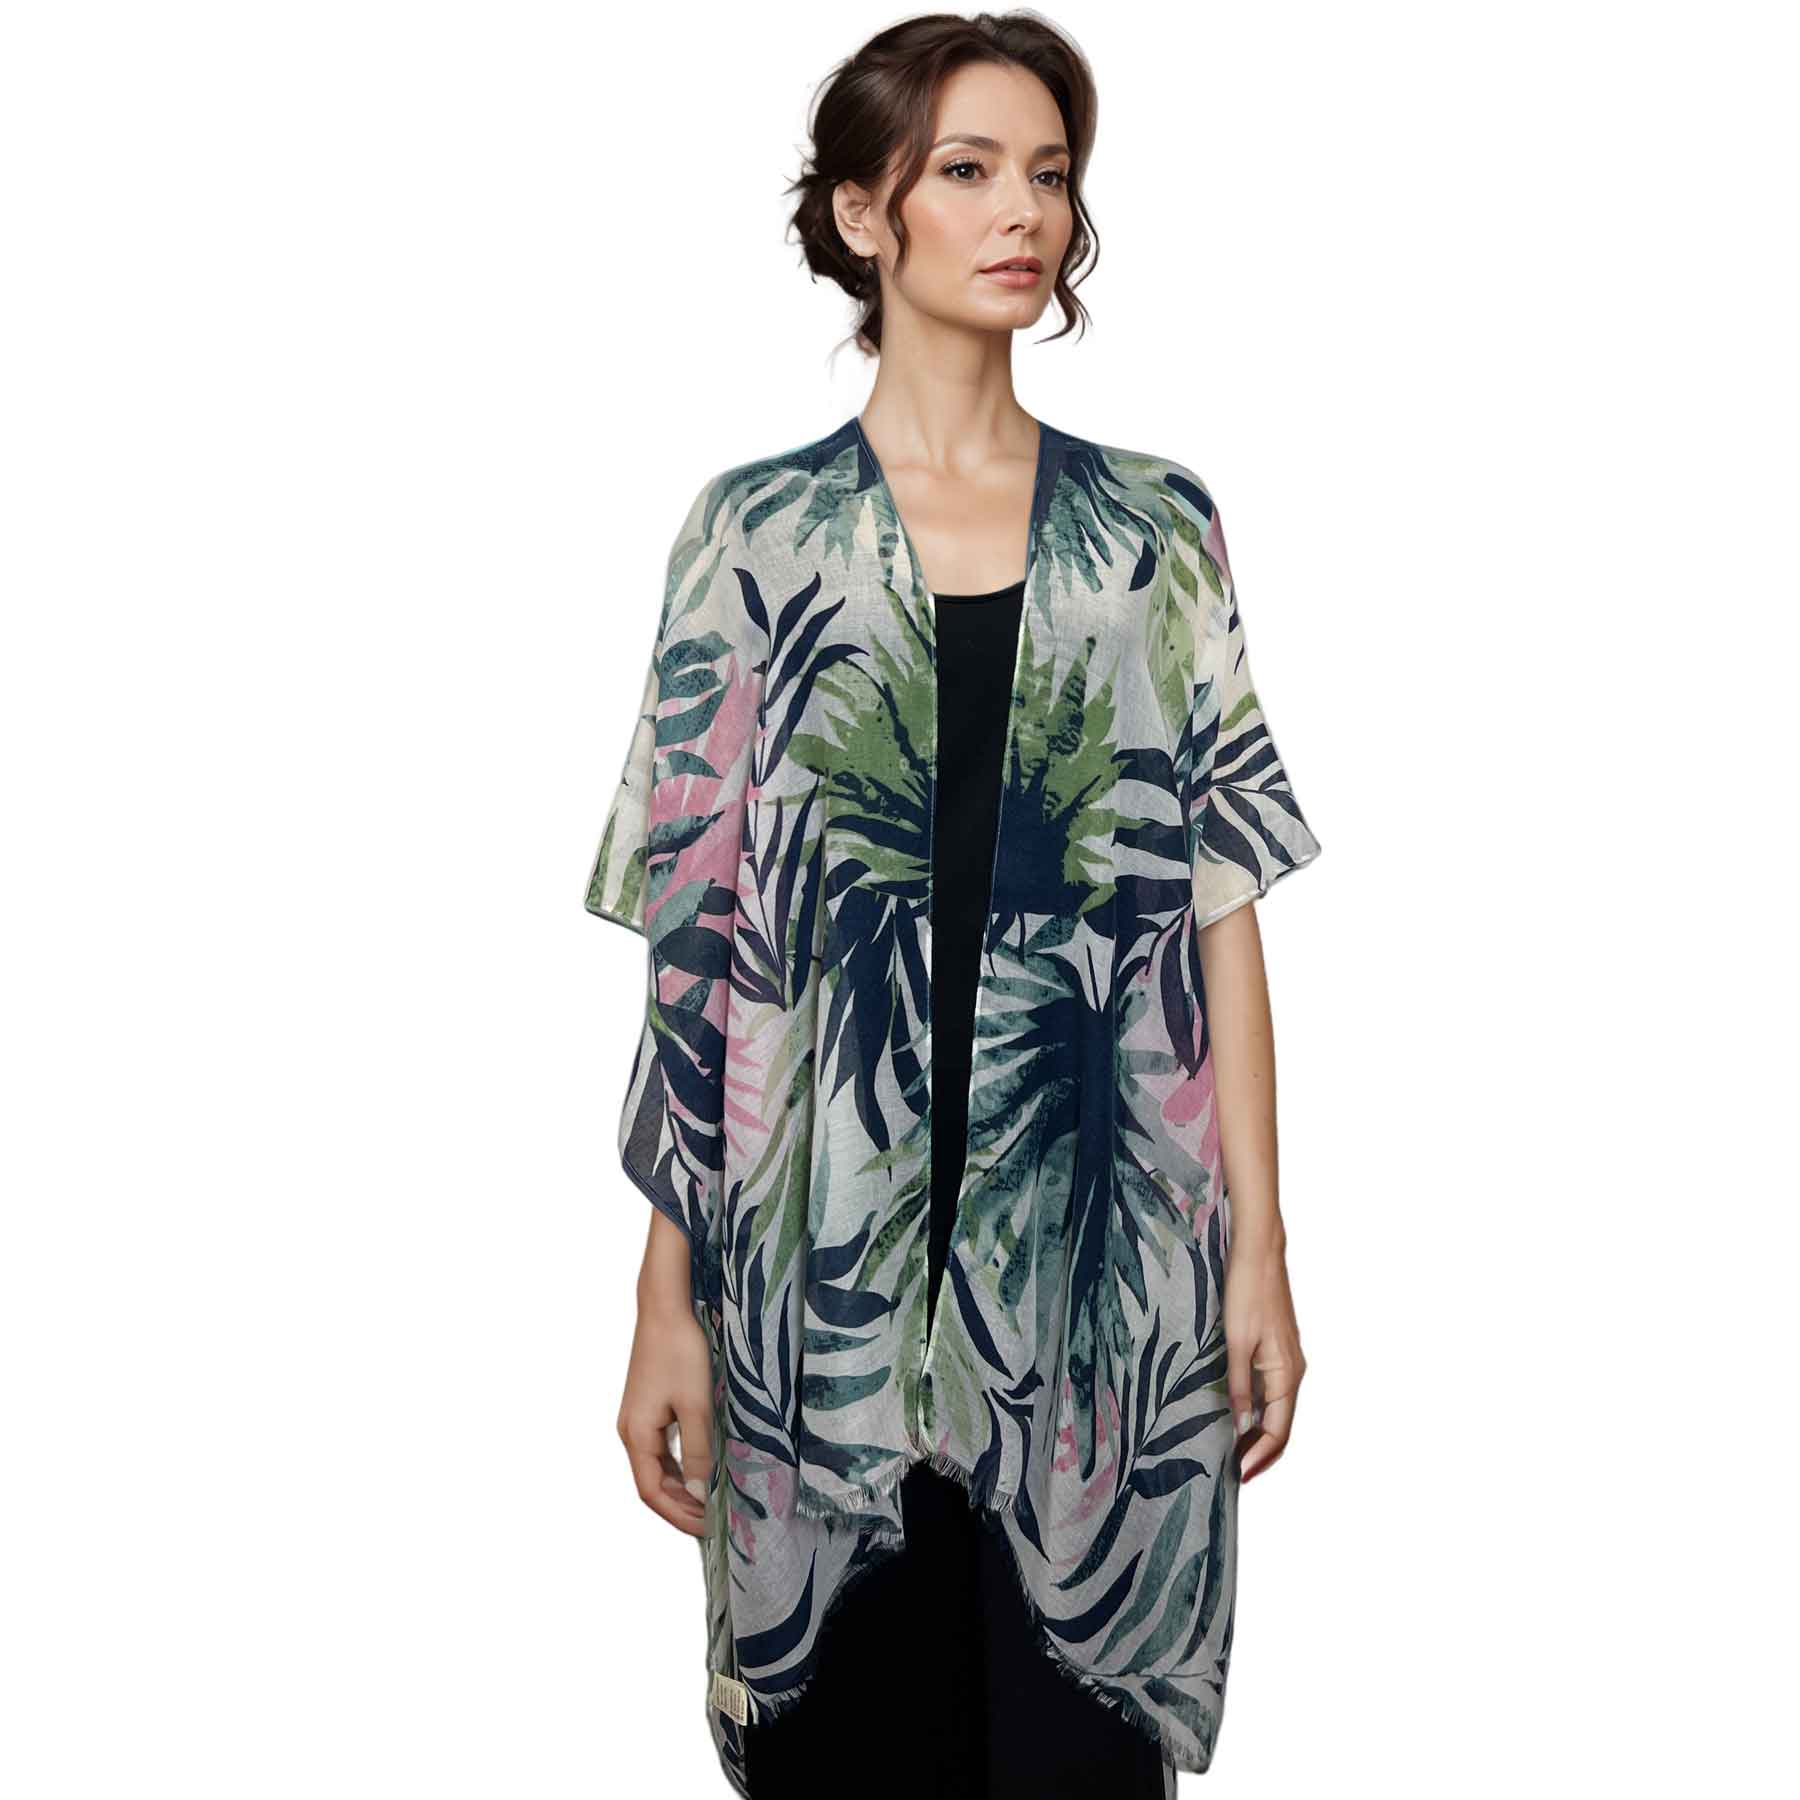 10197 - Tropical Leaf Print Kimono